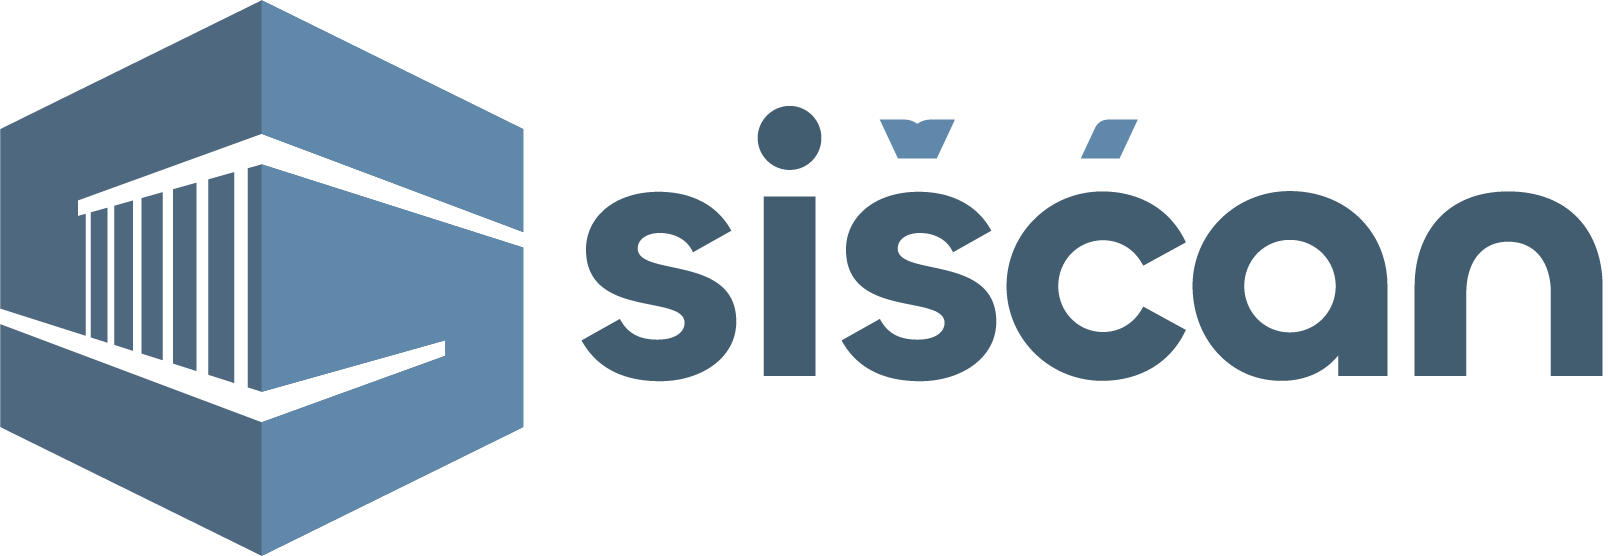 siscan logo white